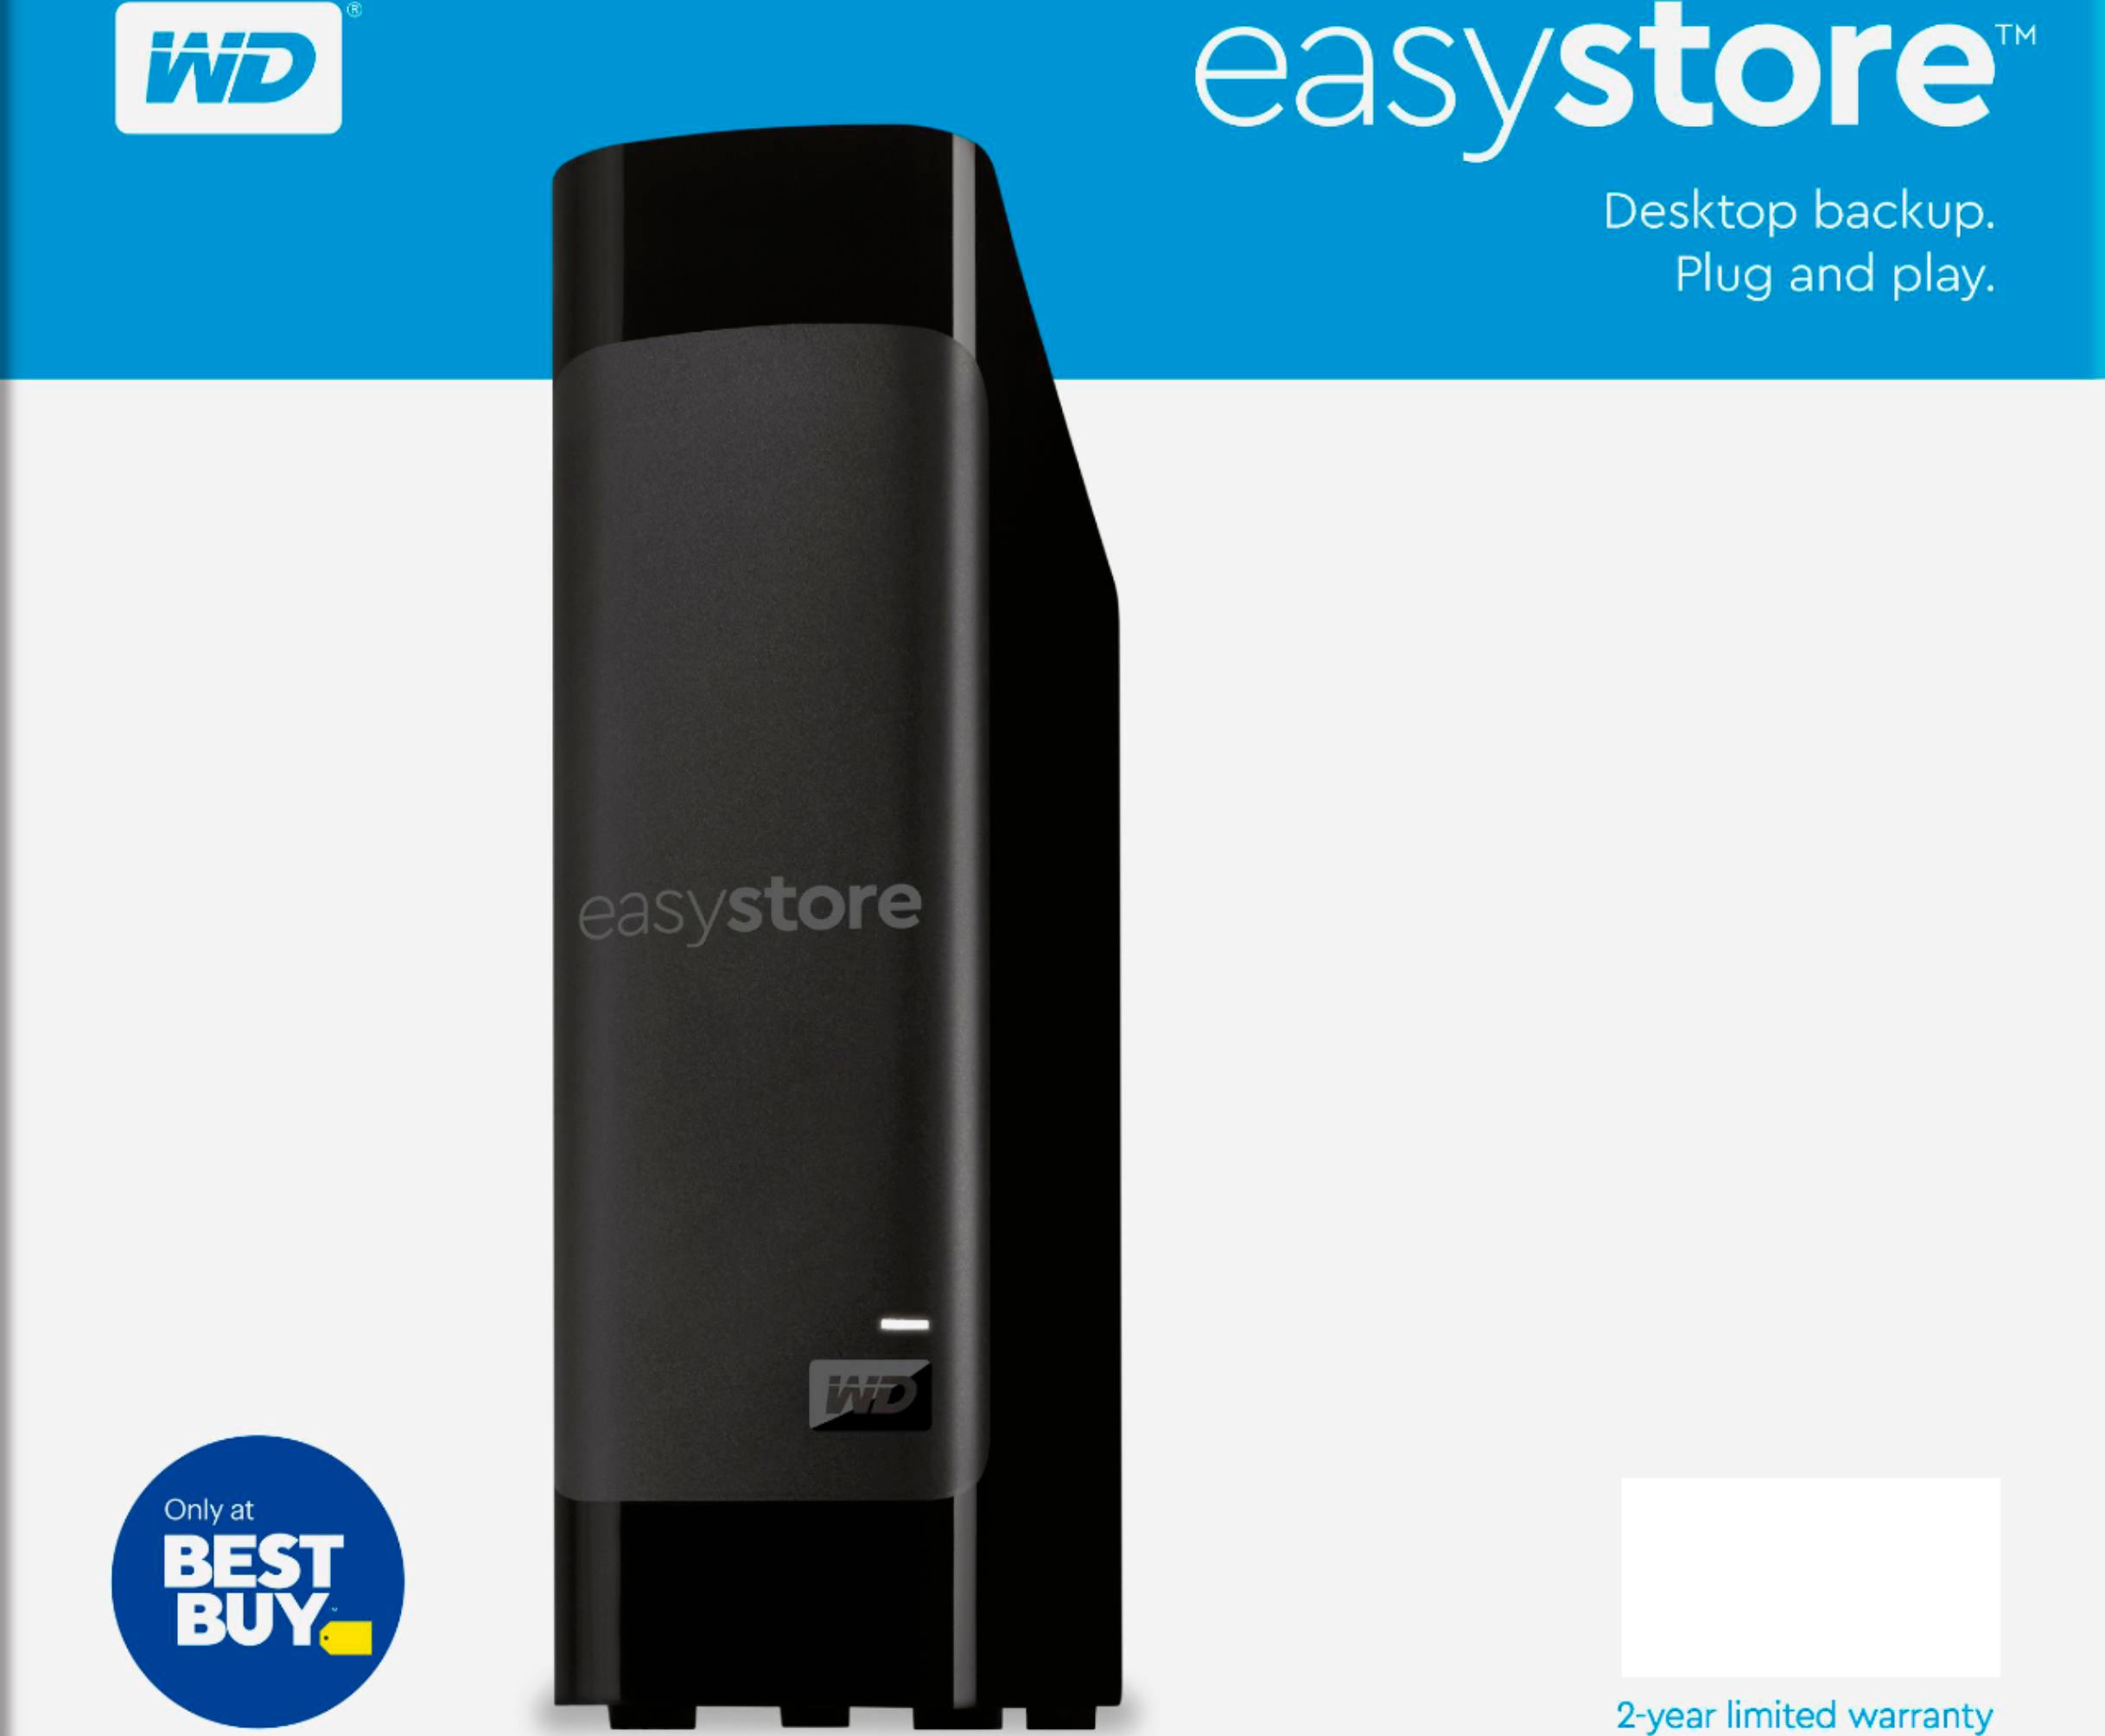 WD - easystore 16TB External USB 3.0 Hard Drive - Black $389.99